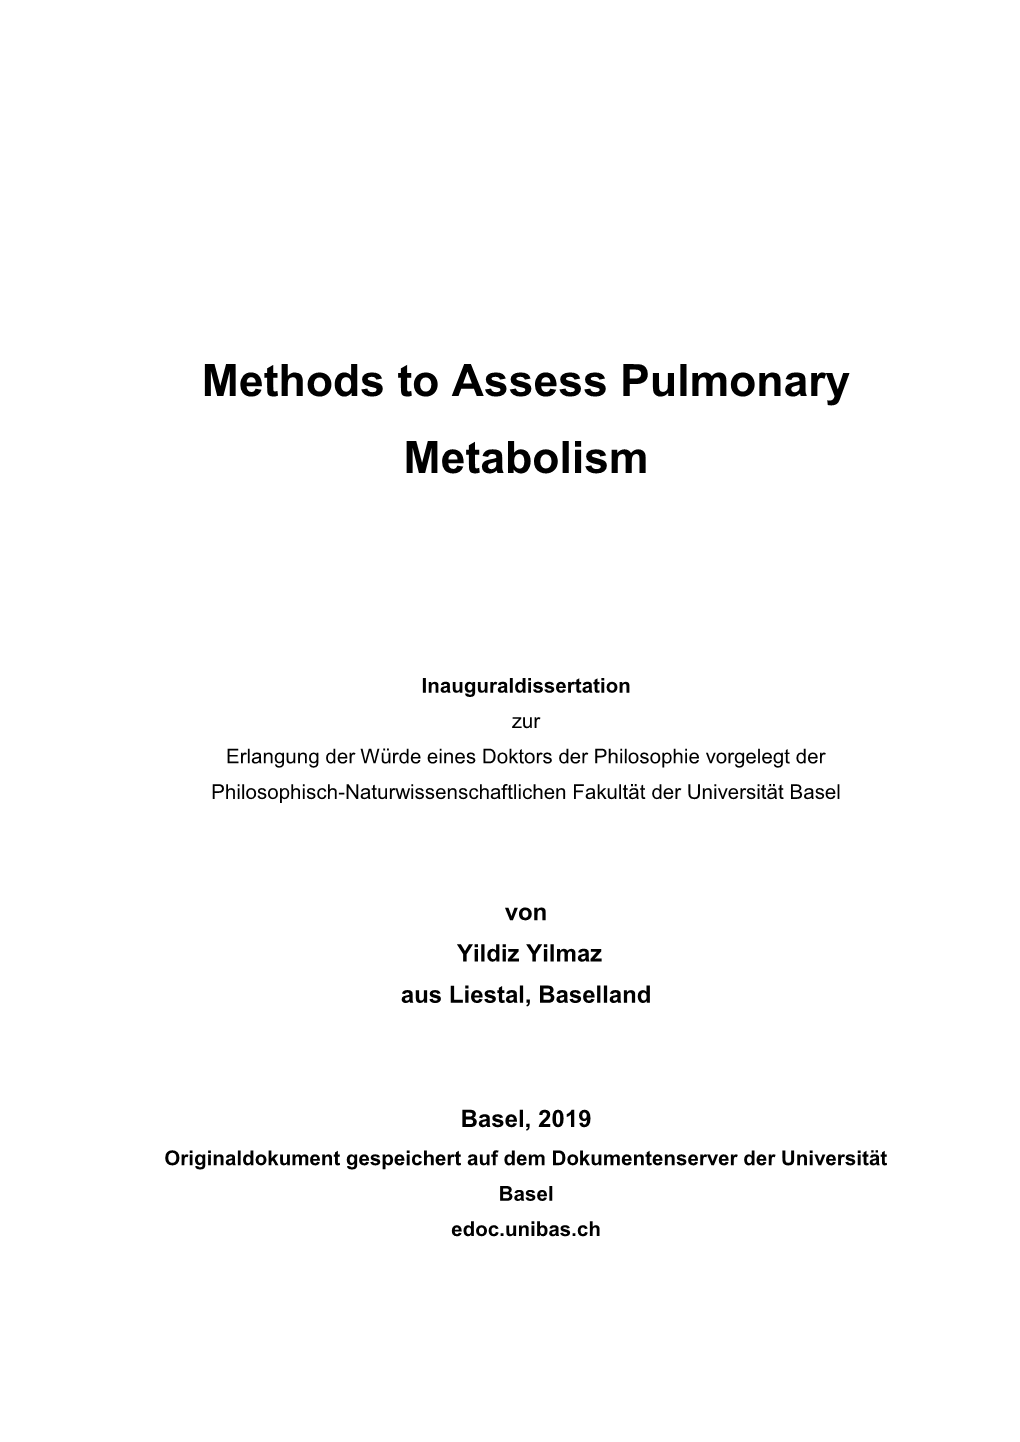 Methods to Assess Pulmonary Metabolism